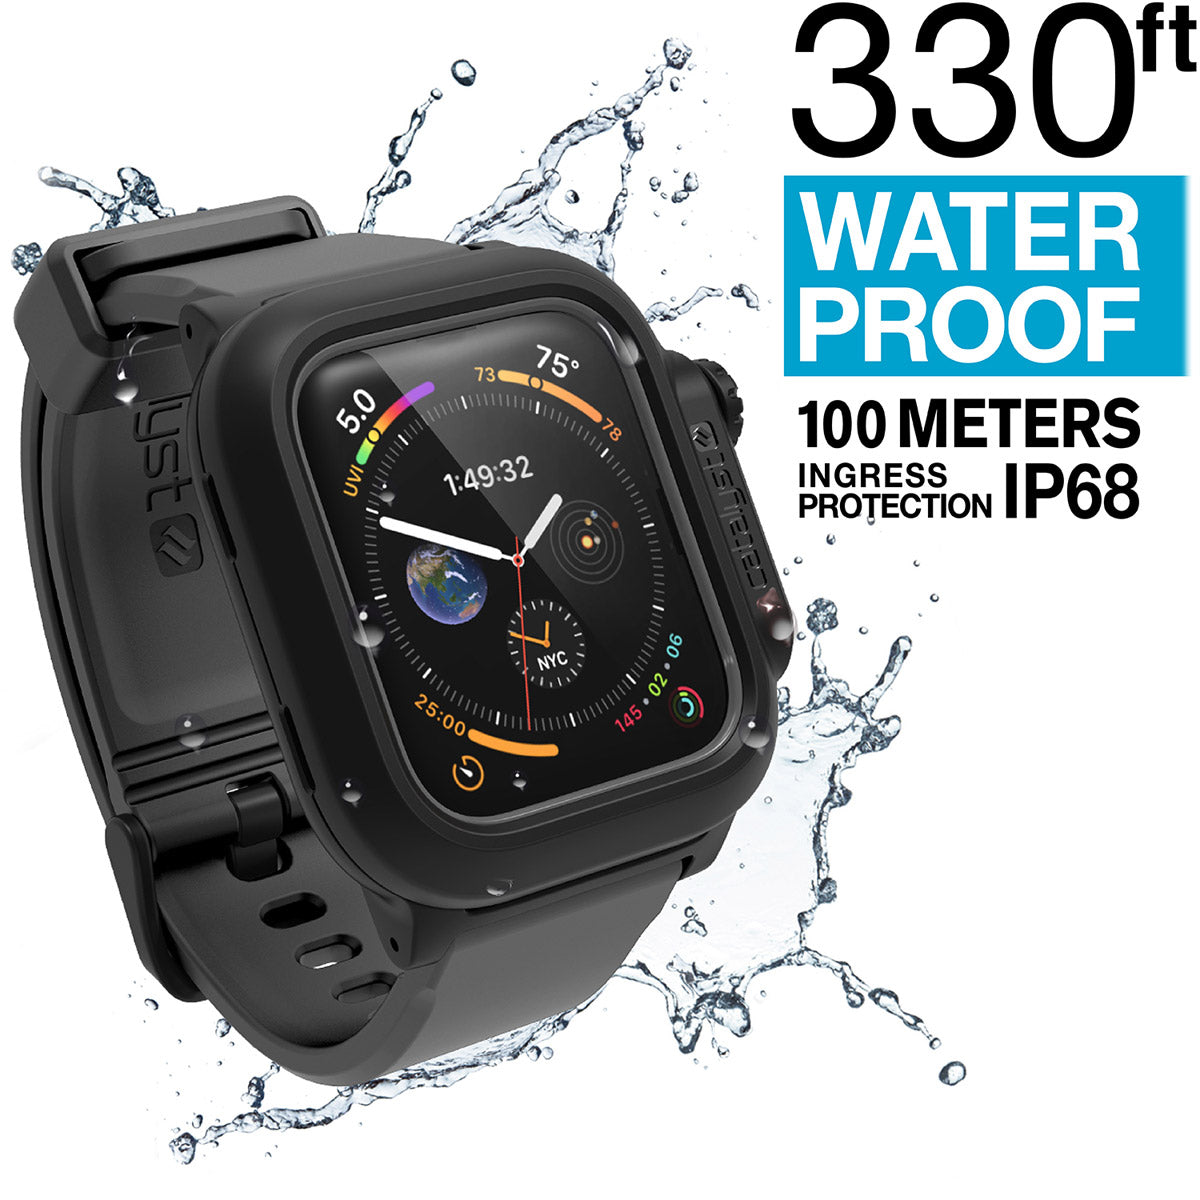 catalyst apple watch series 6 5 4 se gen 2 1 40mm 44mm waterproof case band black gray with splashes of water text reads 330ft waterproof 100 meters ingress protection ip68